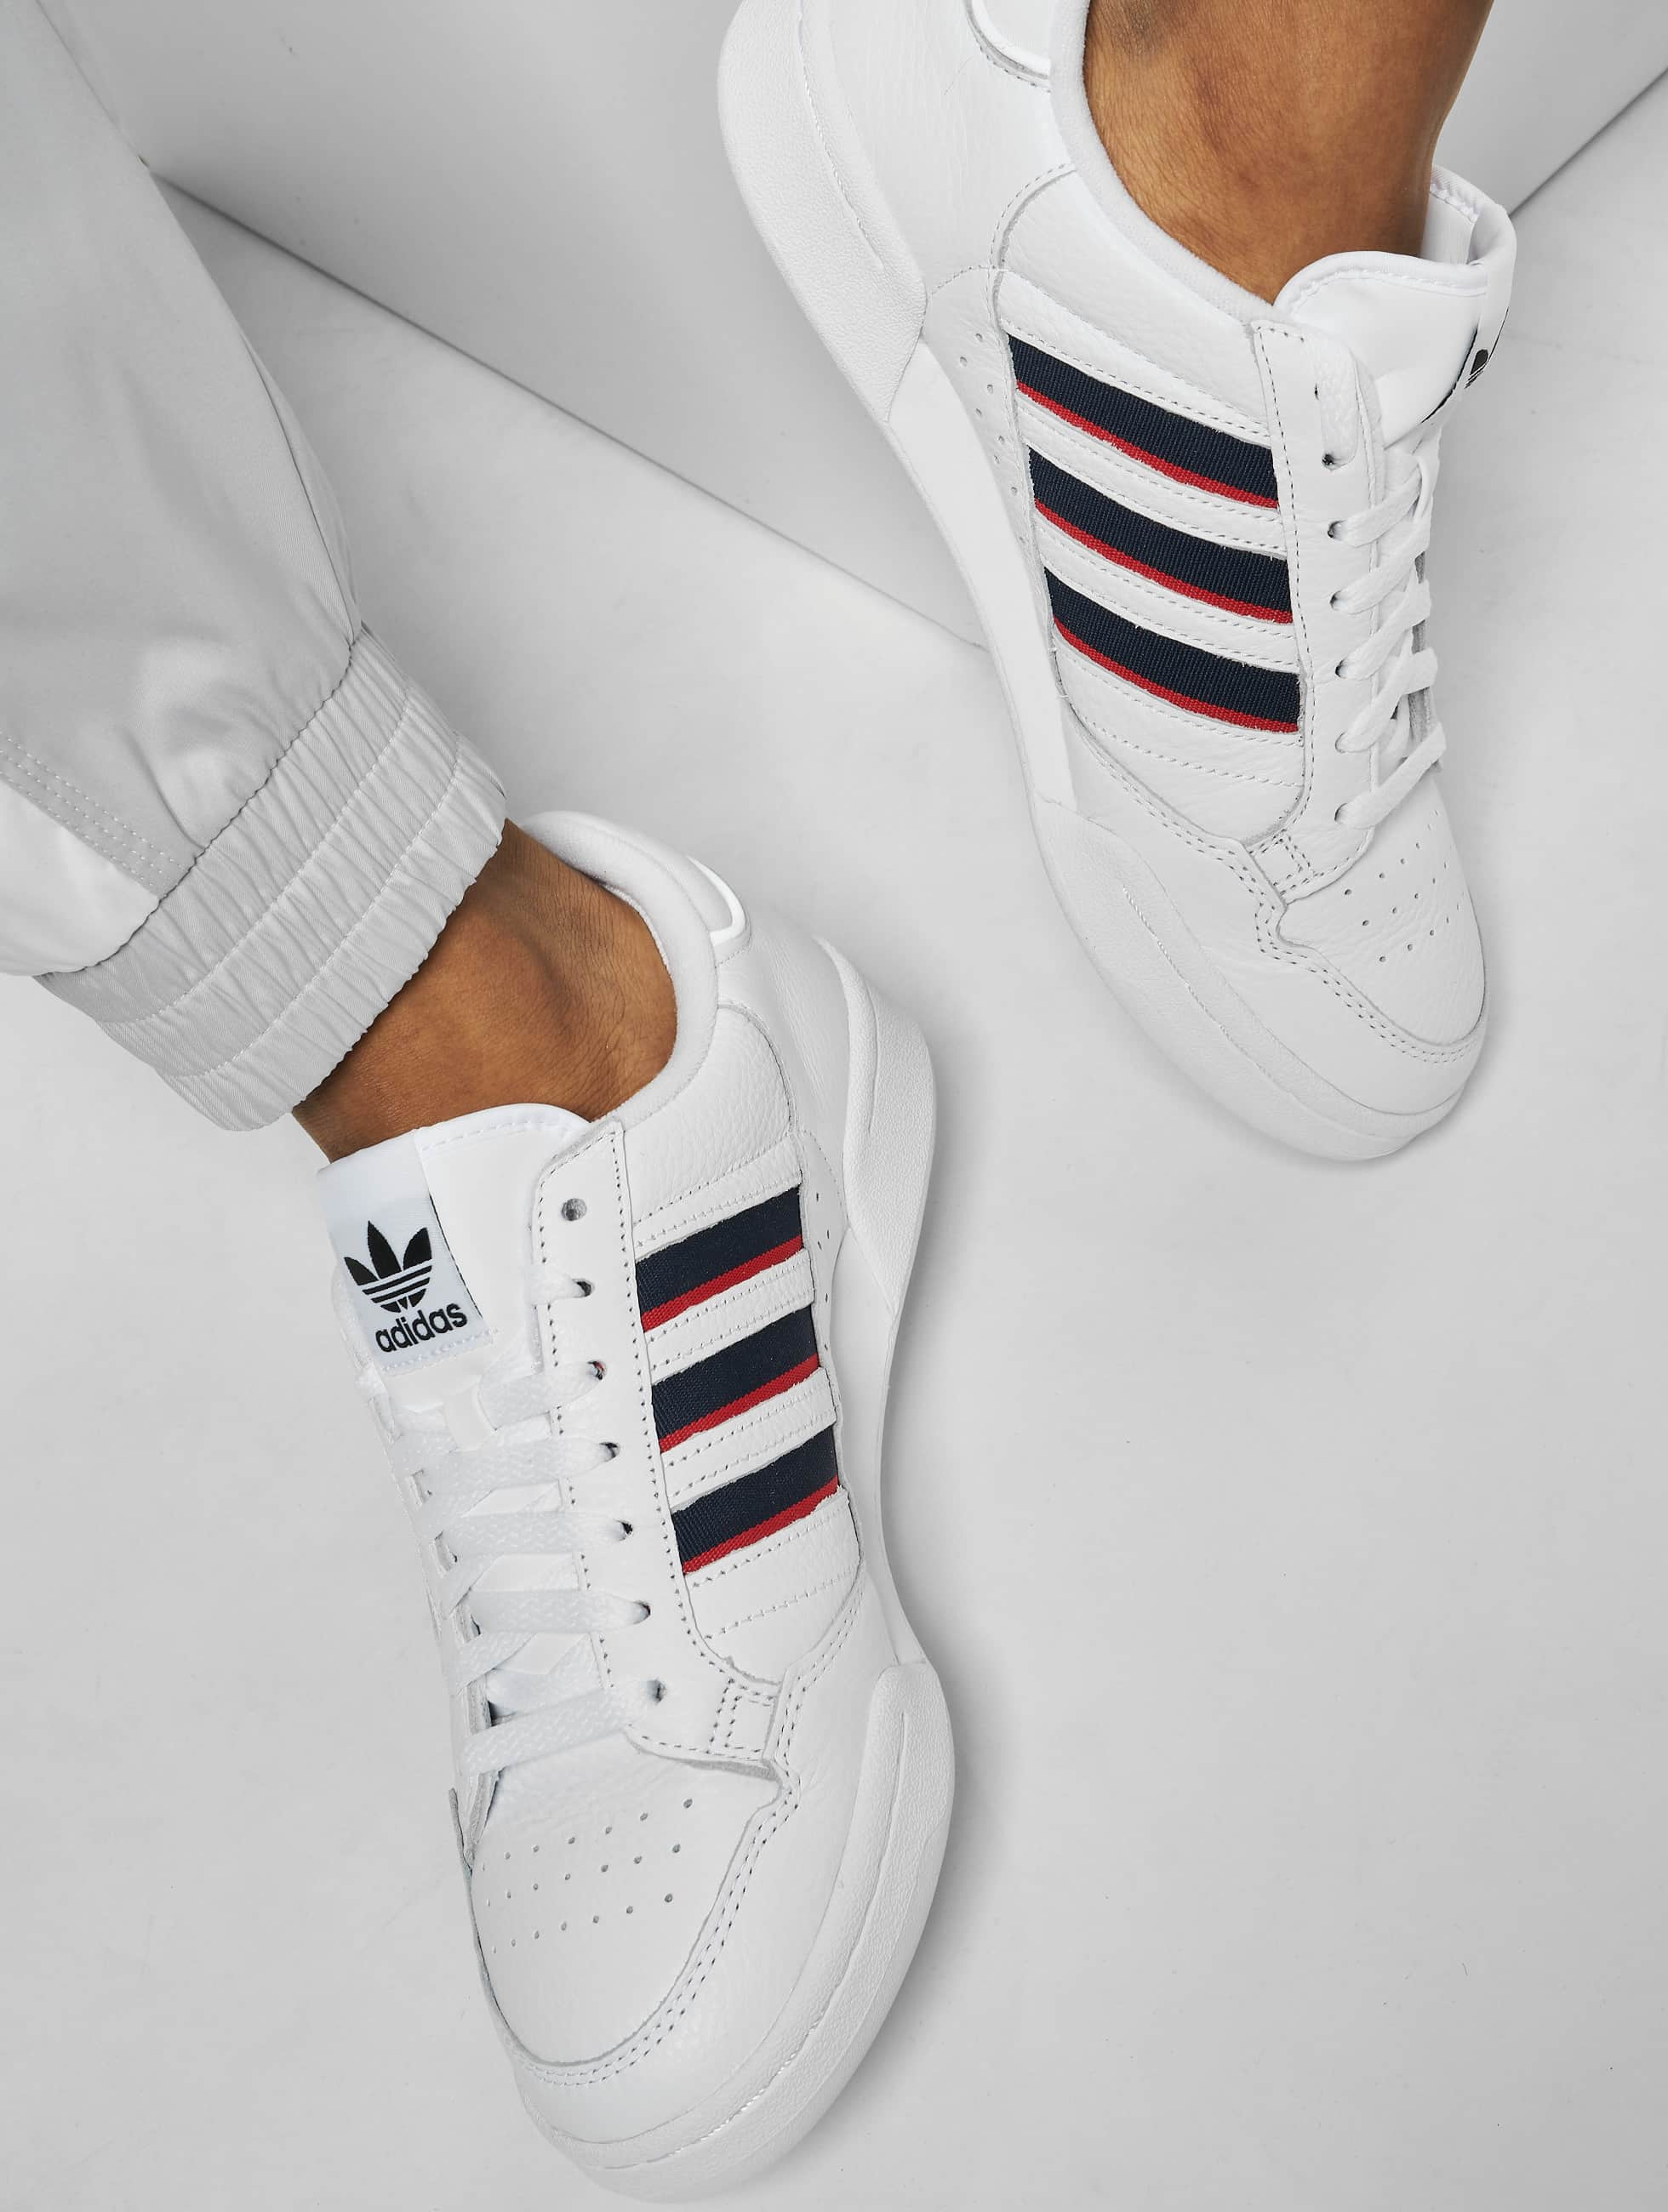 vand blomsten på den anden side, Traktat adidas Originals Sko / Sneakers Continental 80 Stripe i hvid 831214